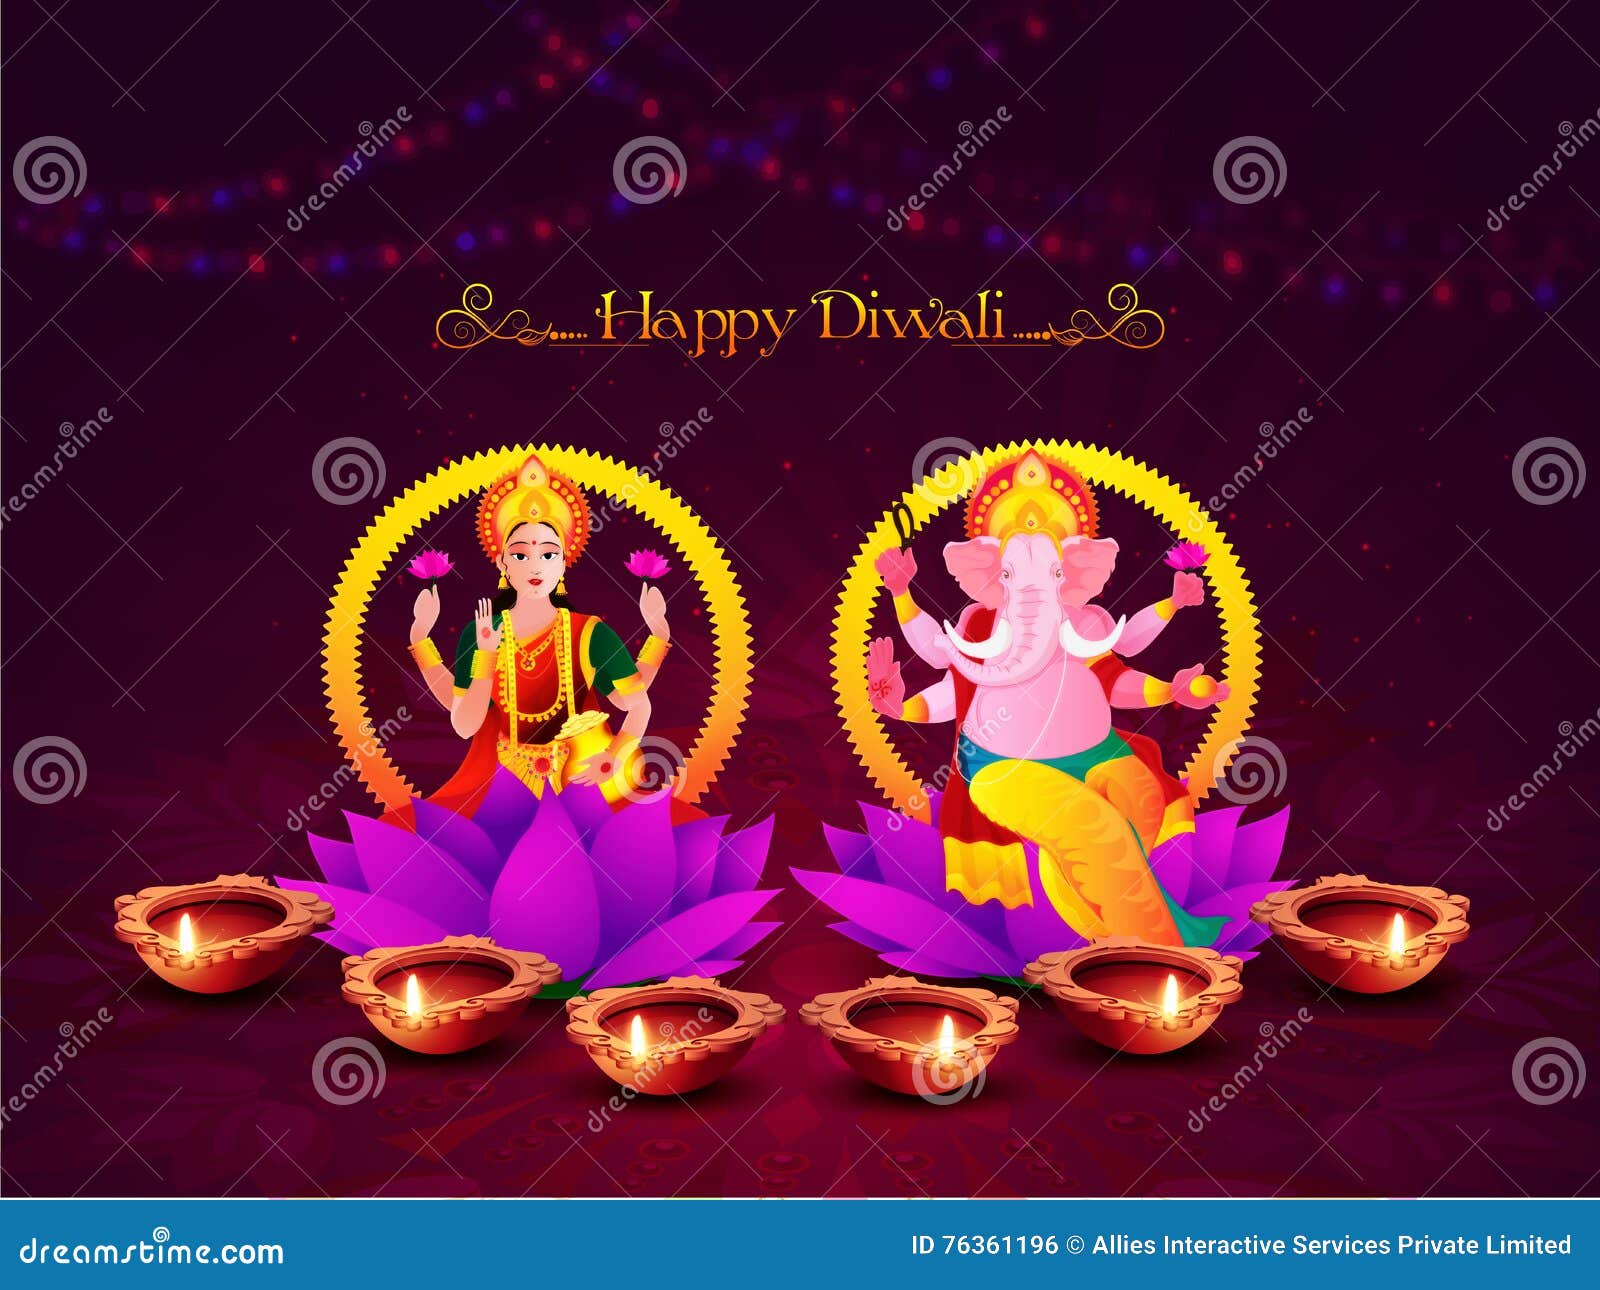 goddess lakshmi and lord ganesha for diwali.